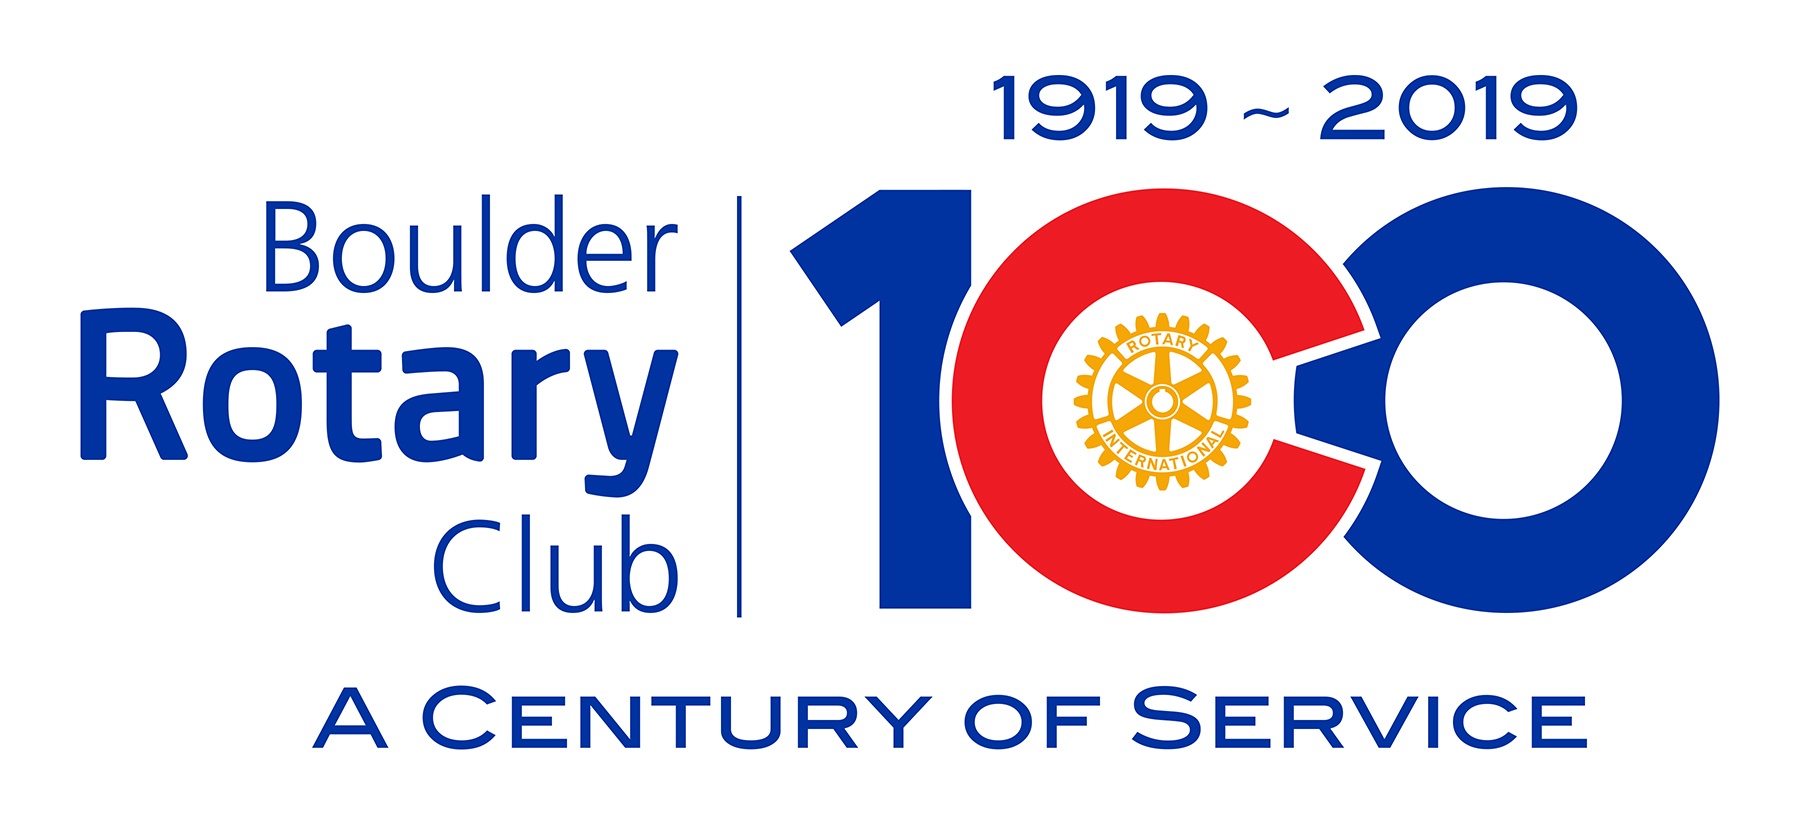 Boulder Rotary Club Centennial